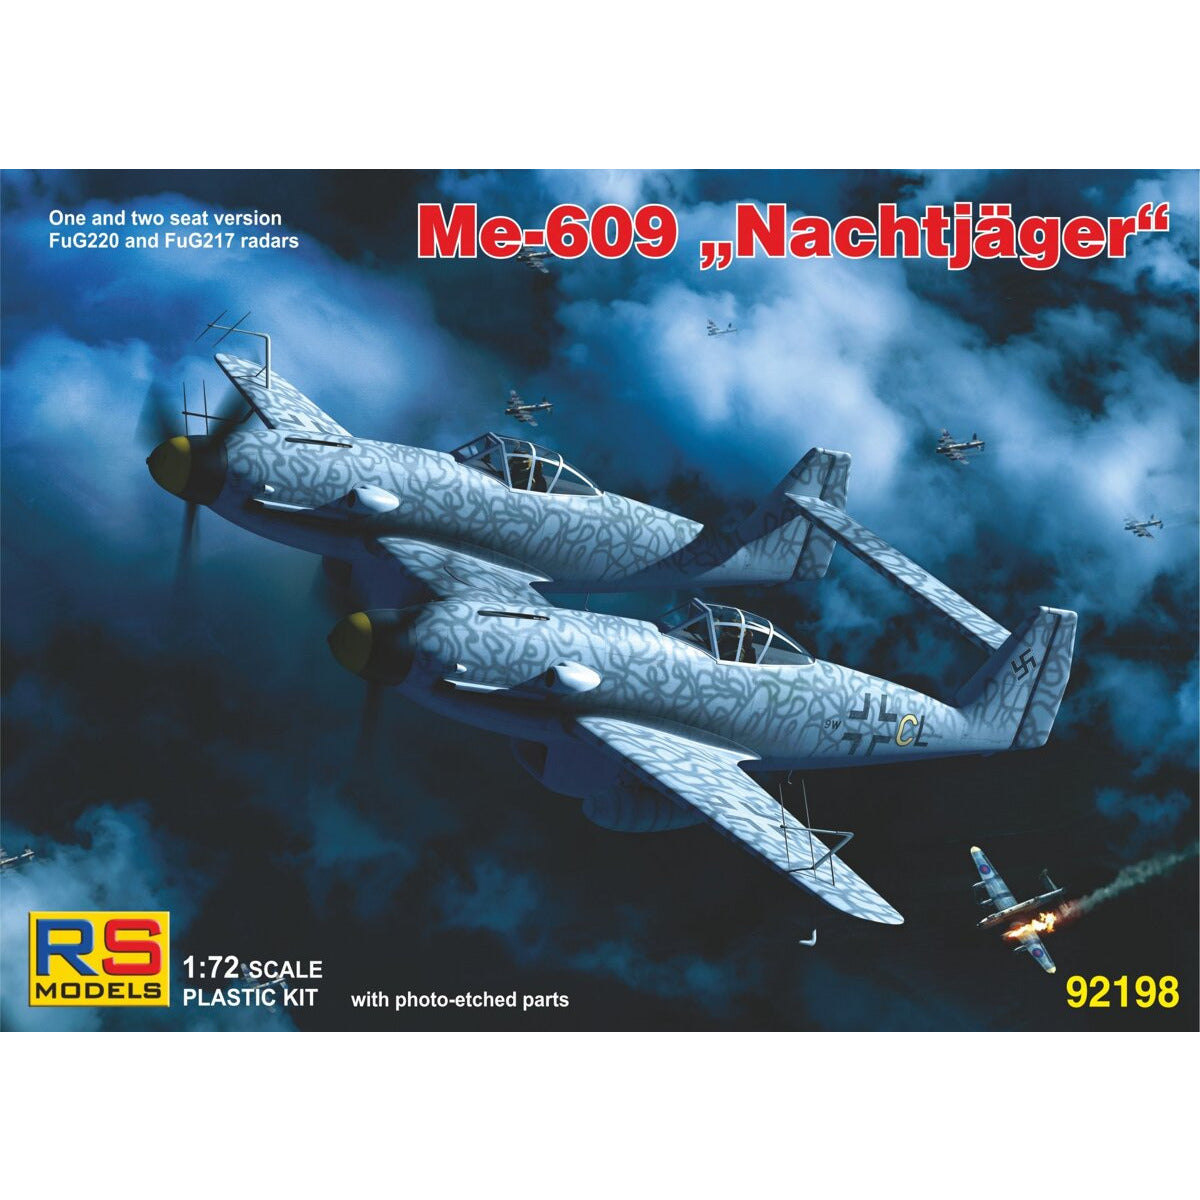 RS MODELS 1/72 Me-609 "Nachtjager"